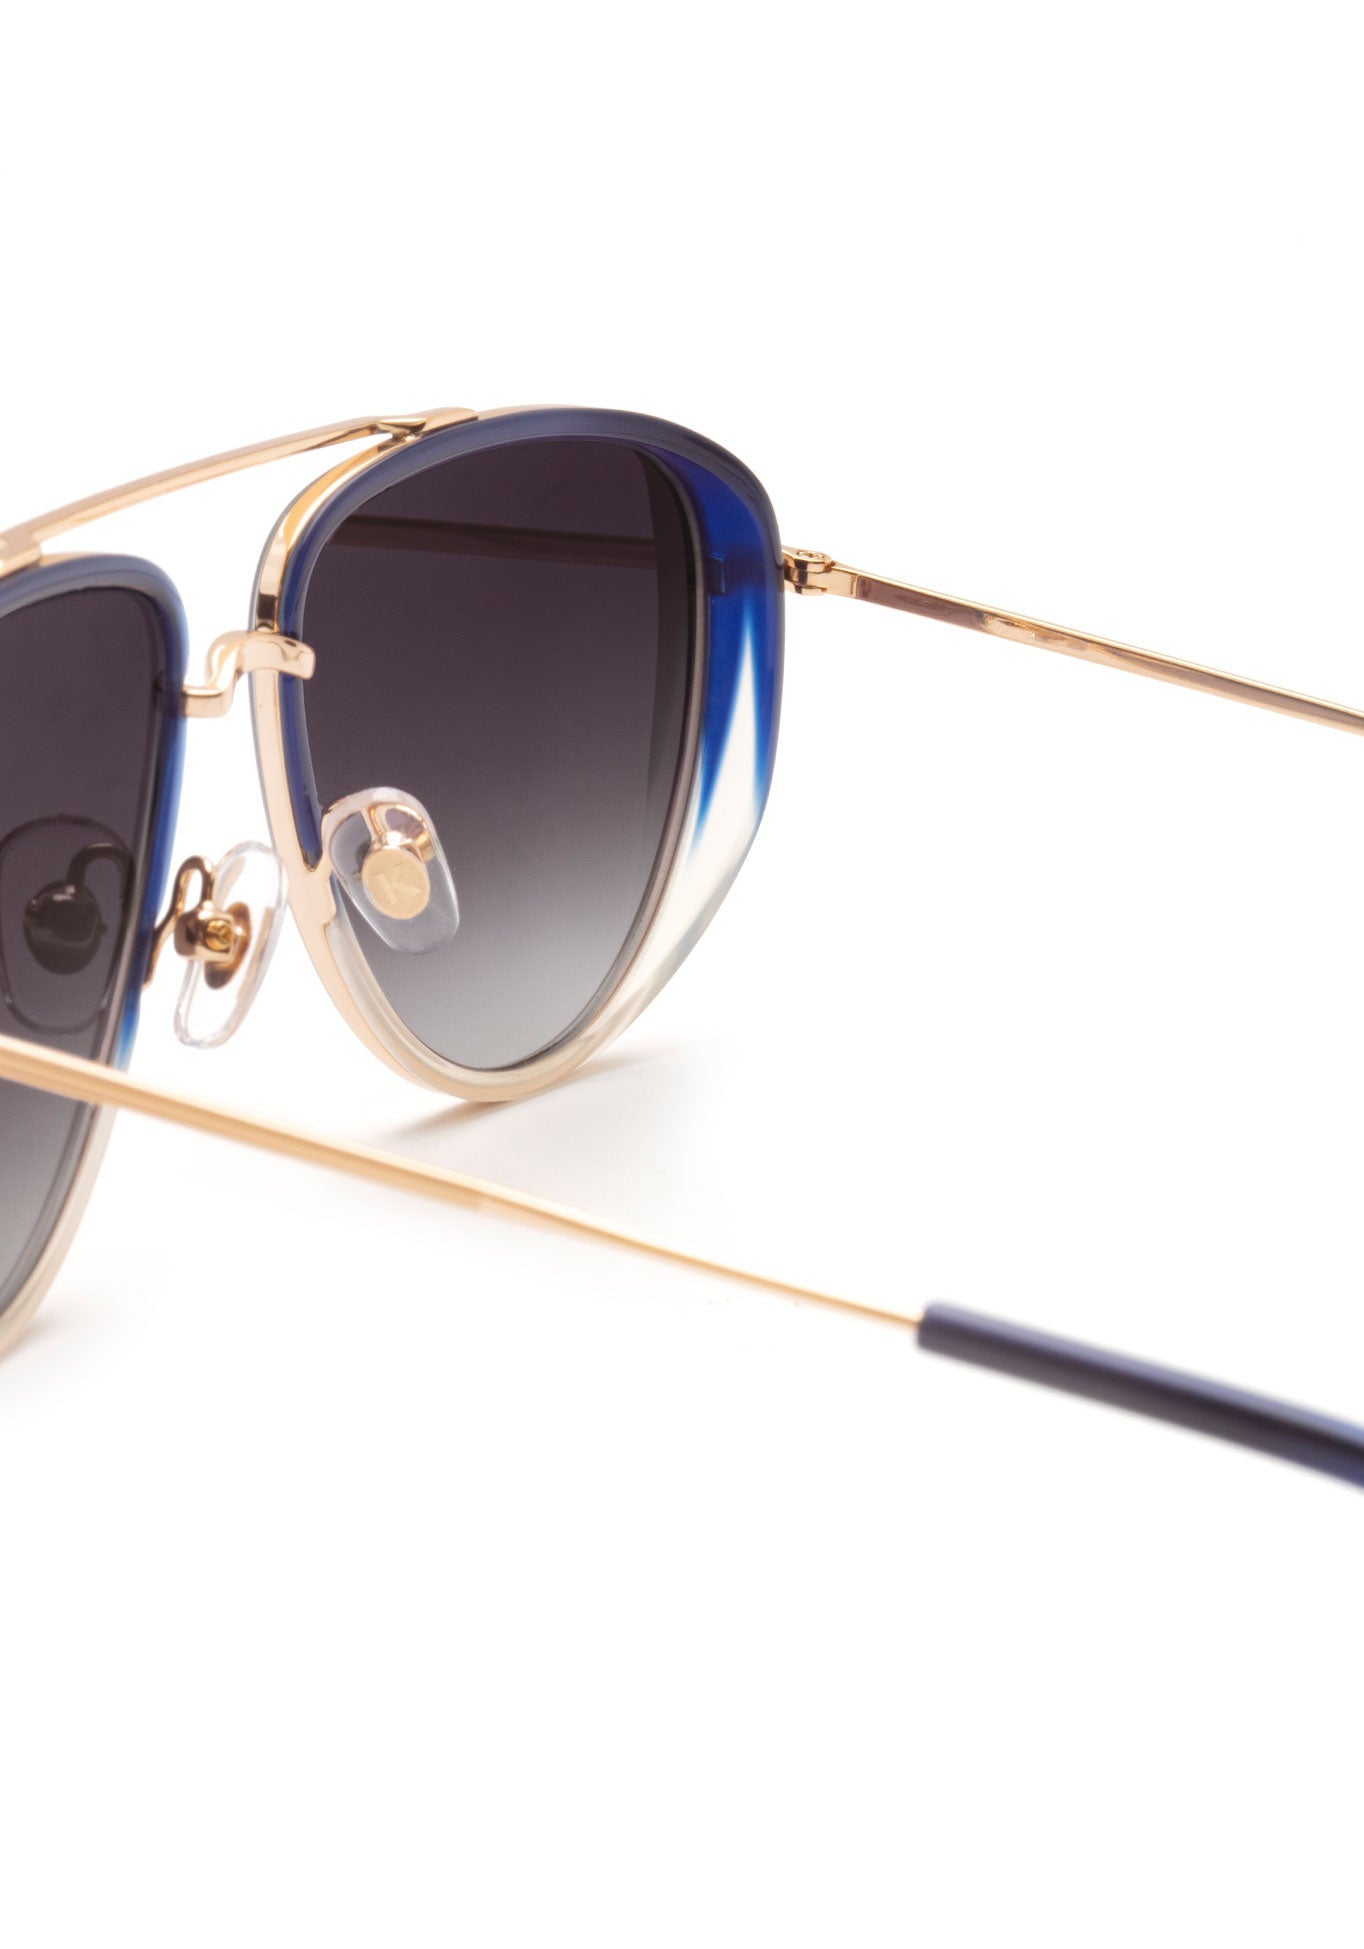 COLEMAN | 18K + Matte Indigo Fade + Gravity Handcrafted, navy acetate luxury KREWE sunglasses womens model